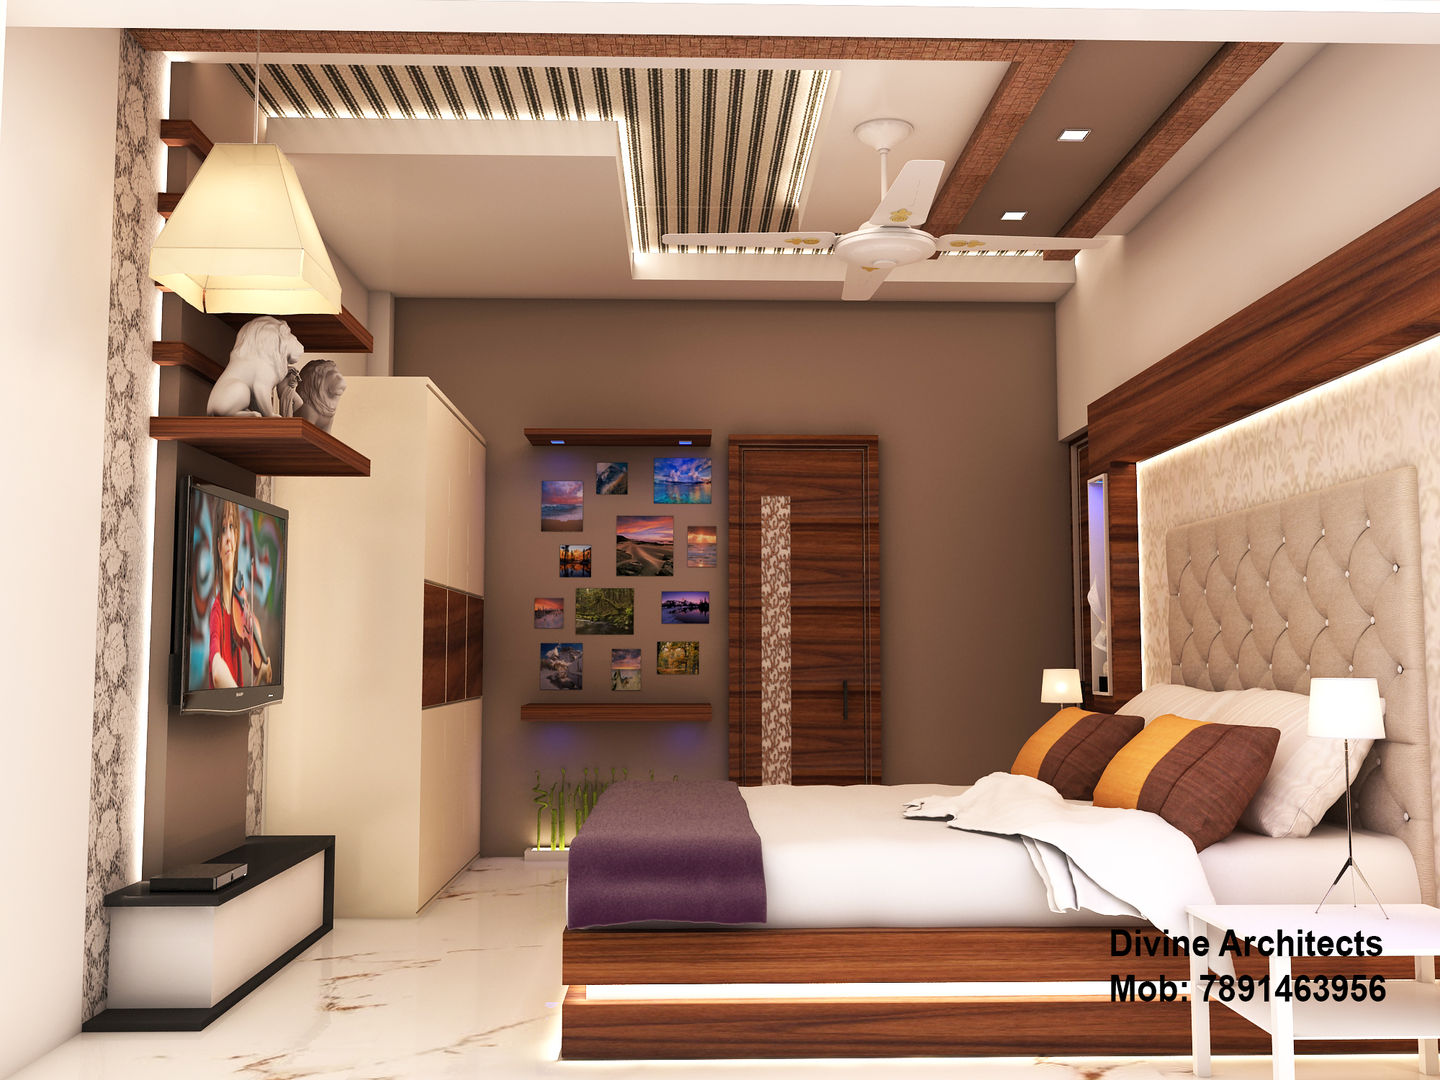 Son_ s bed room interior design for mr. Ramavtar Khunteta jalmahal site joraver Singh gate govind nagar east Jaipur, divine architects divine architects ห้องนอน